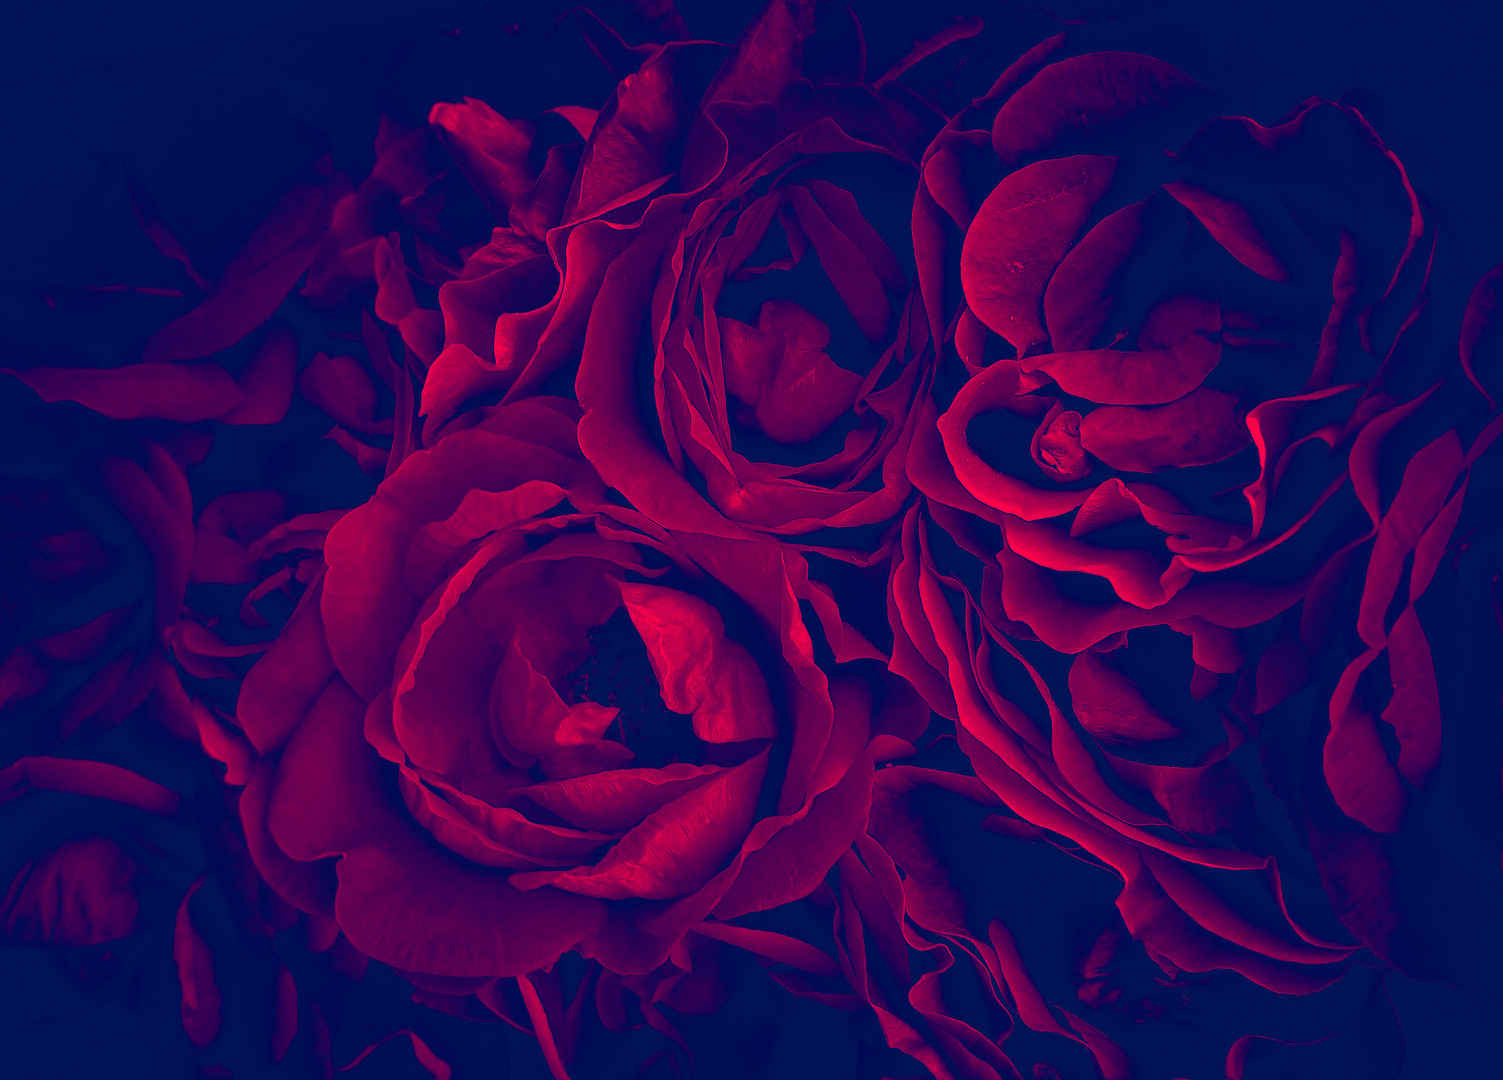                              -Roses-